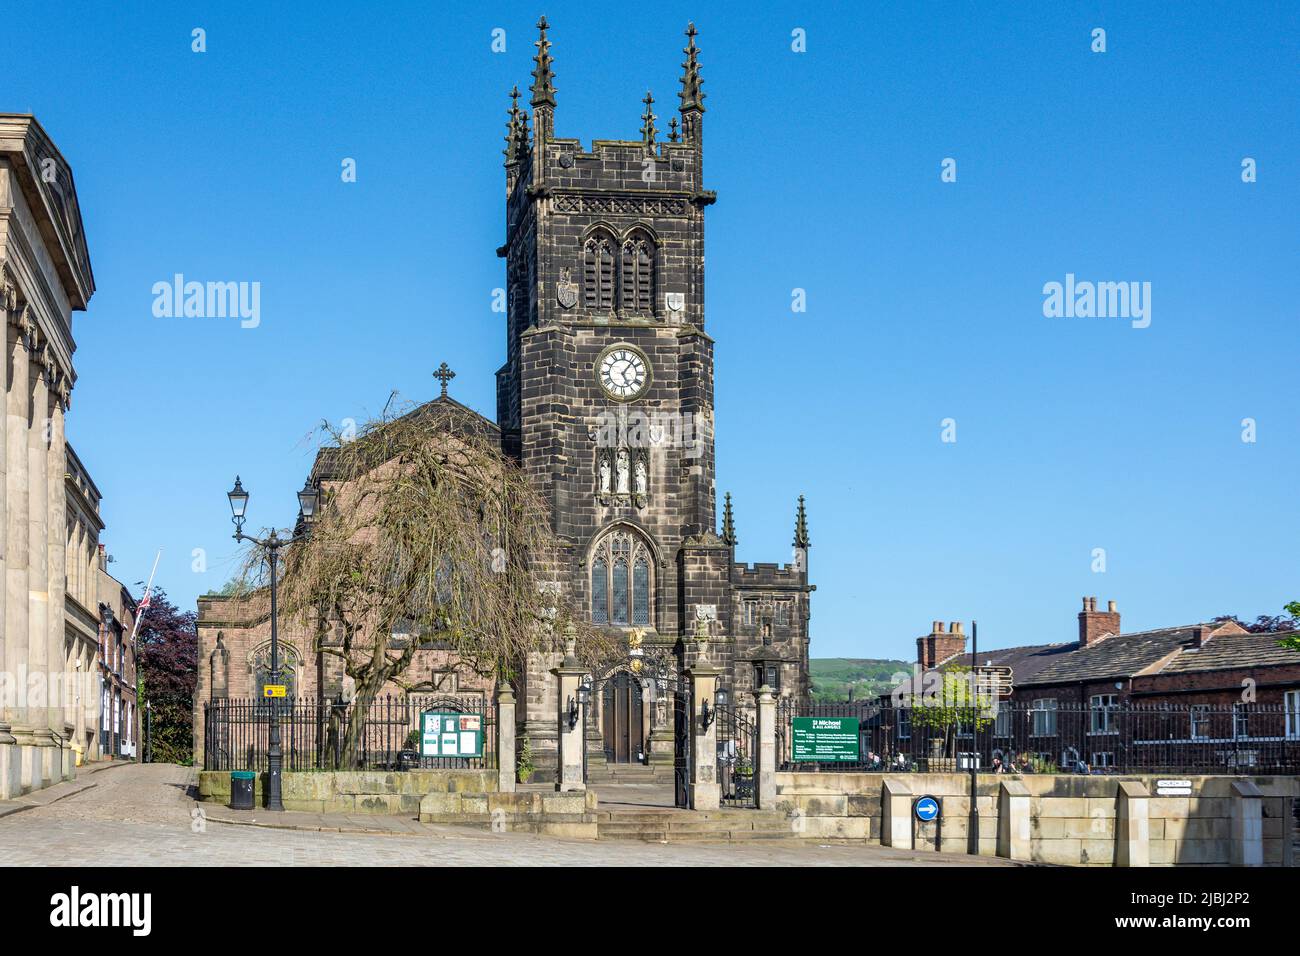 St Michael's Church, Market Place, Macclesfield, Cheshire, England, United Kingdom Stock Photo